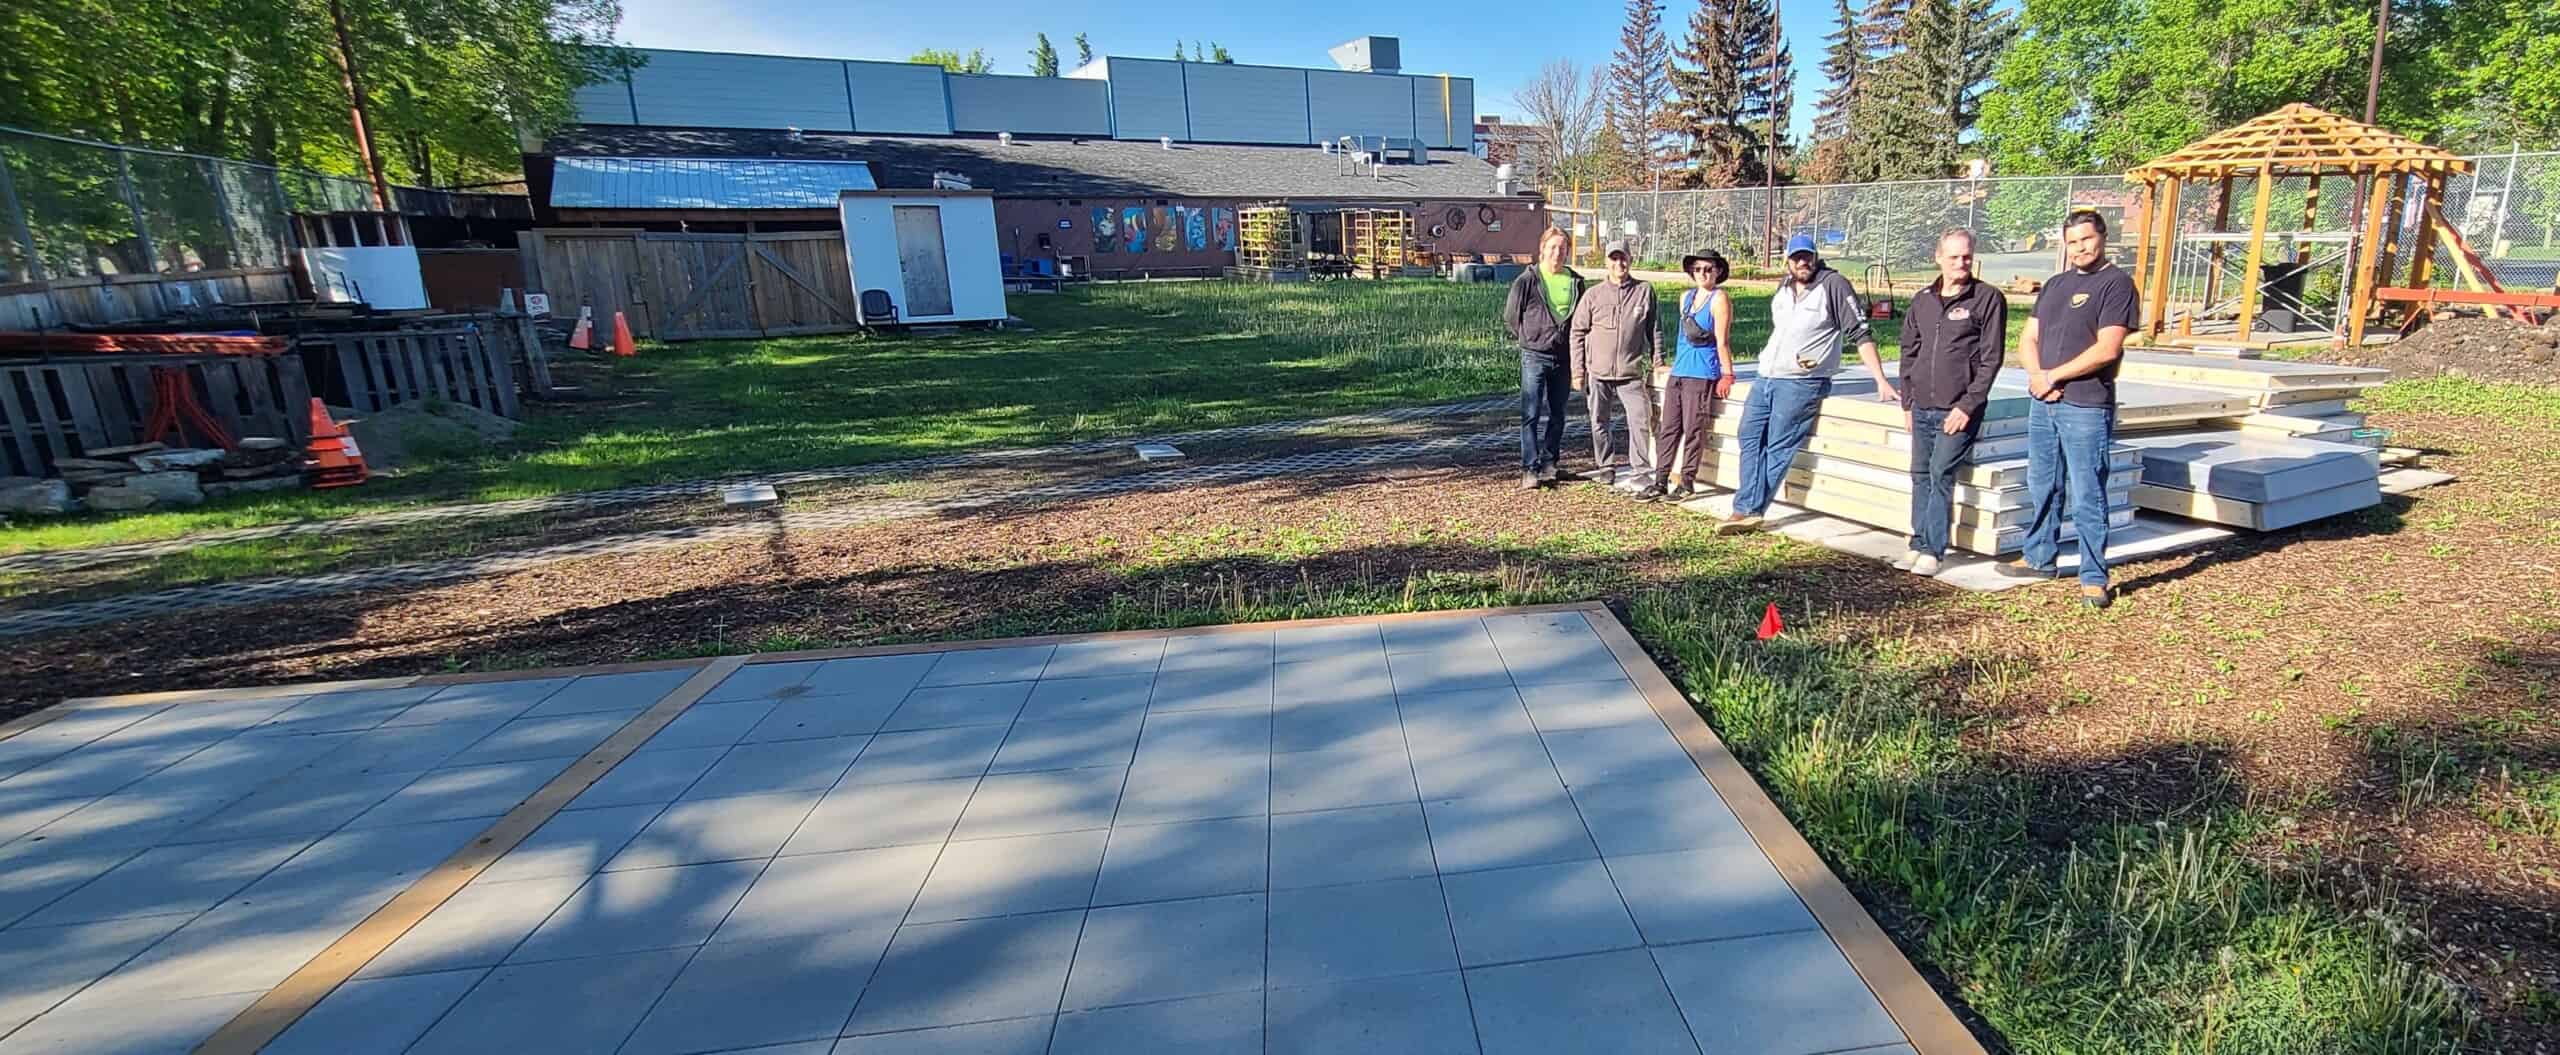 Local community garden expands